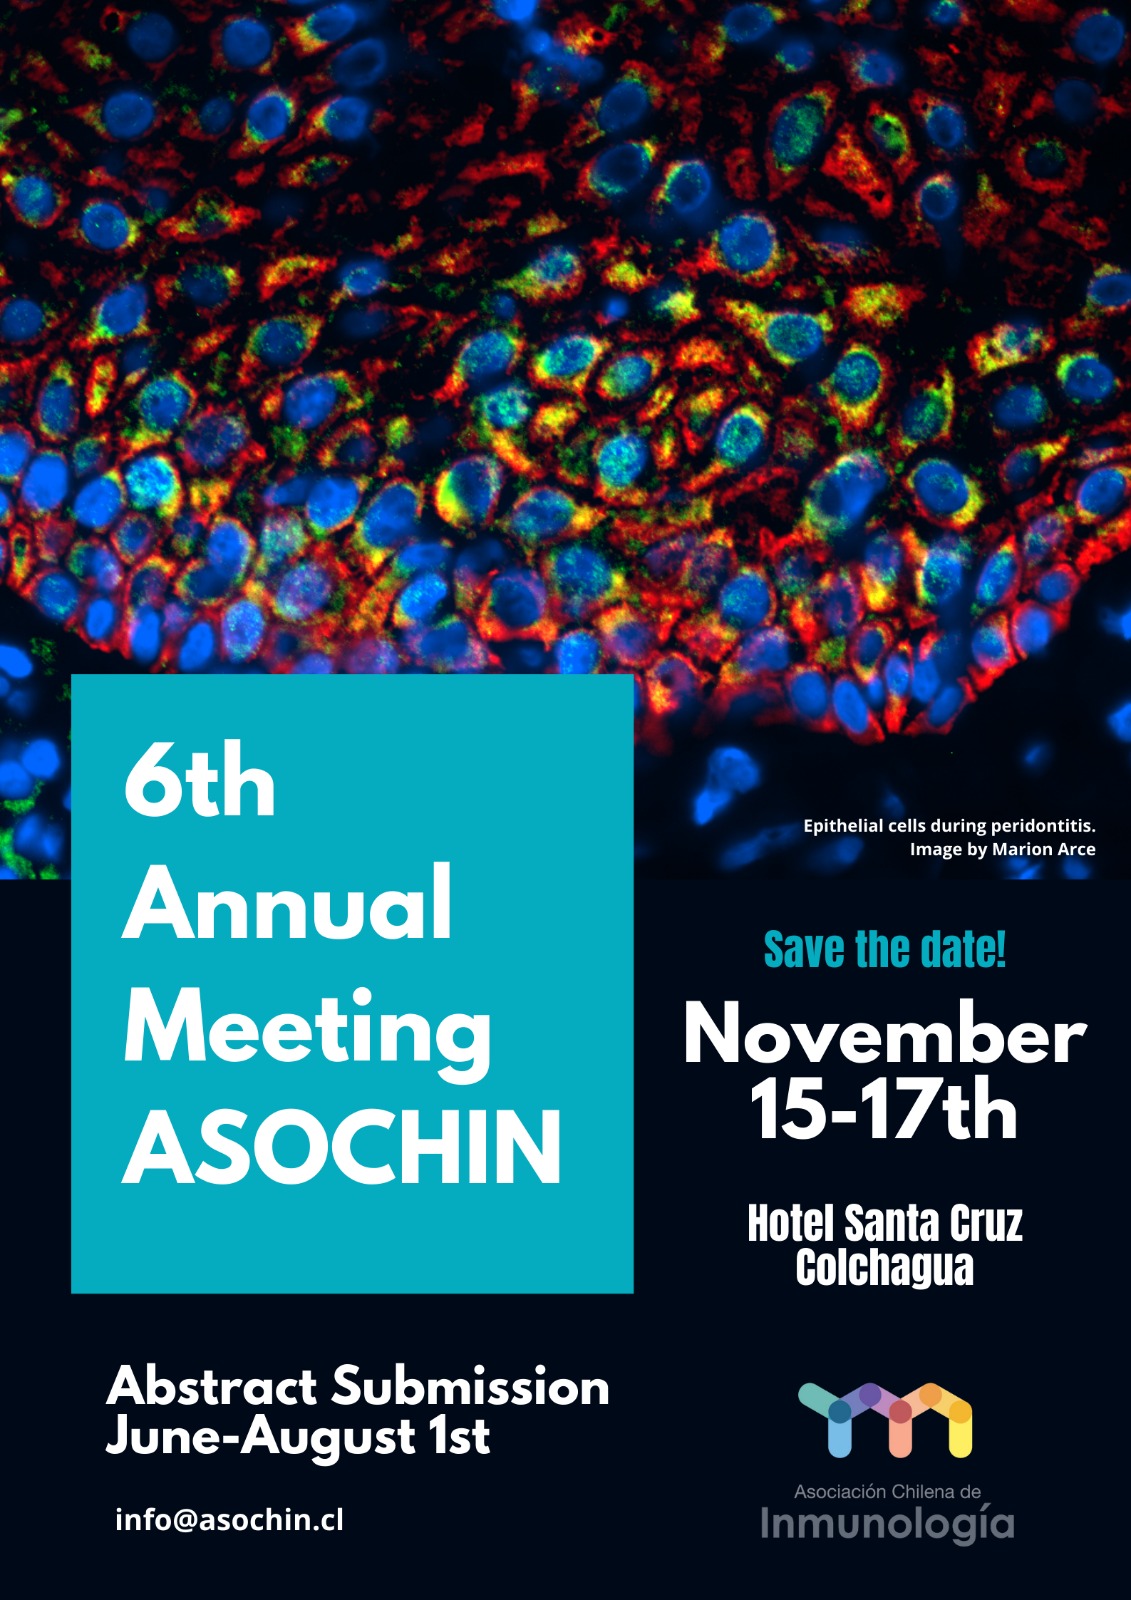 6th Annual Meeting Asochin graphic